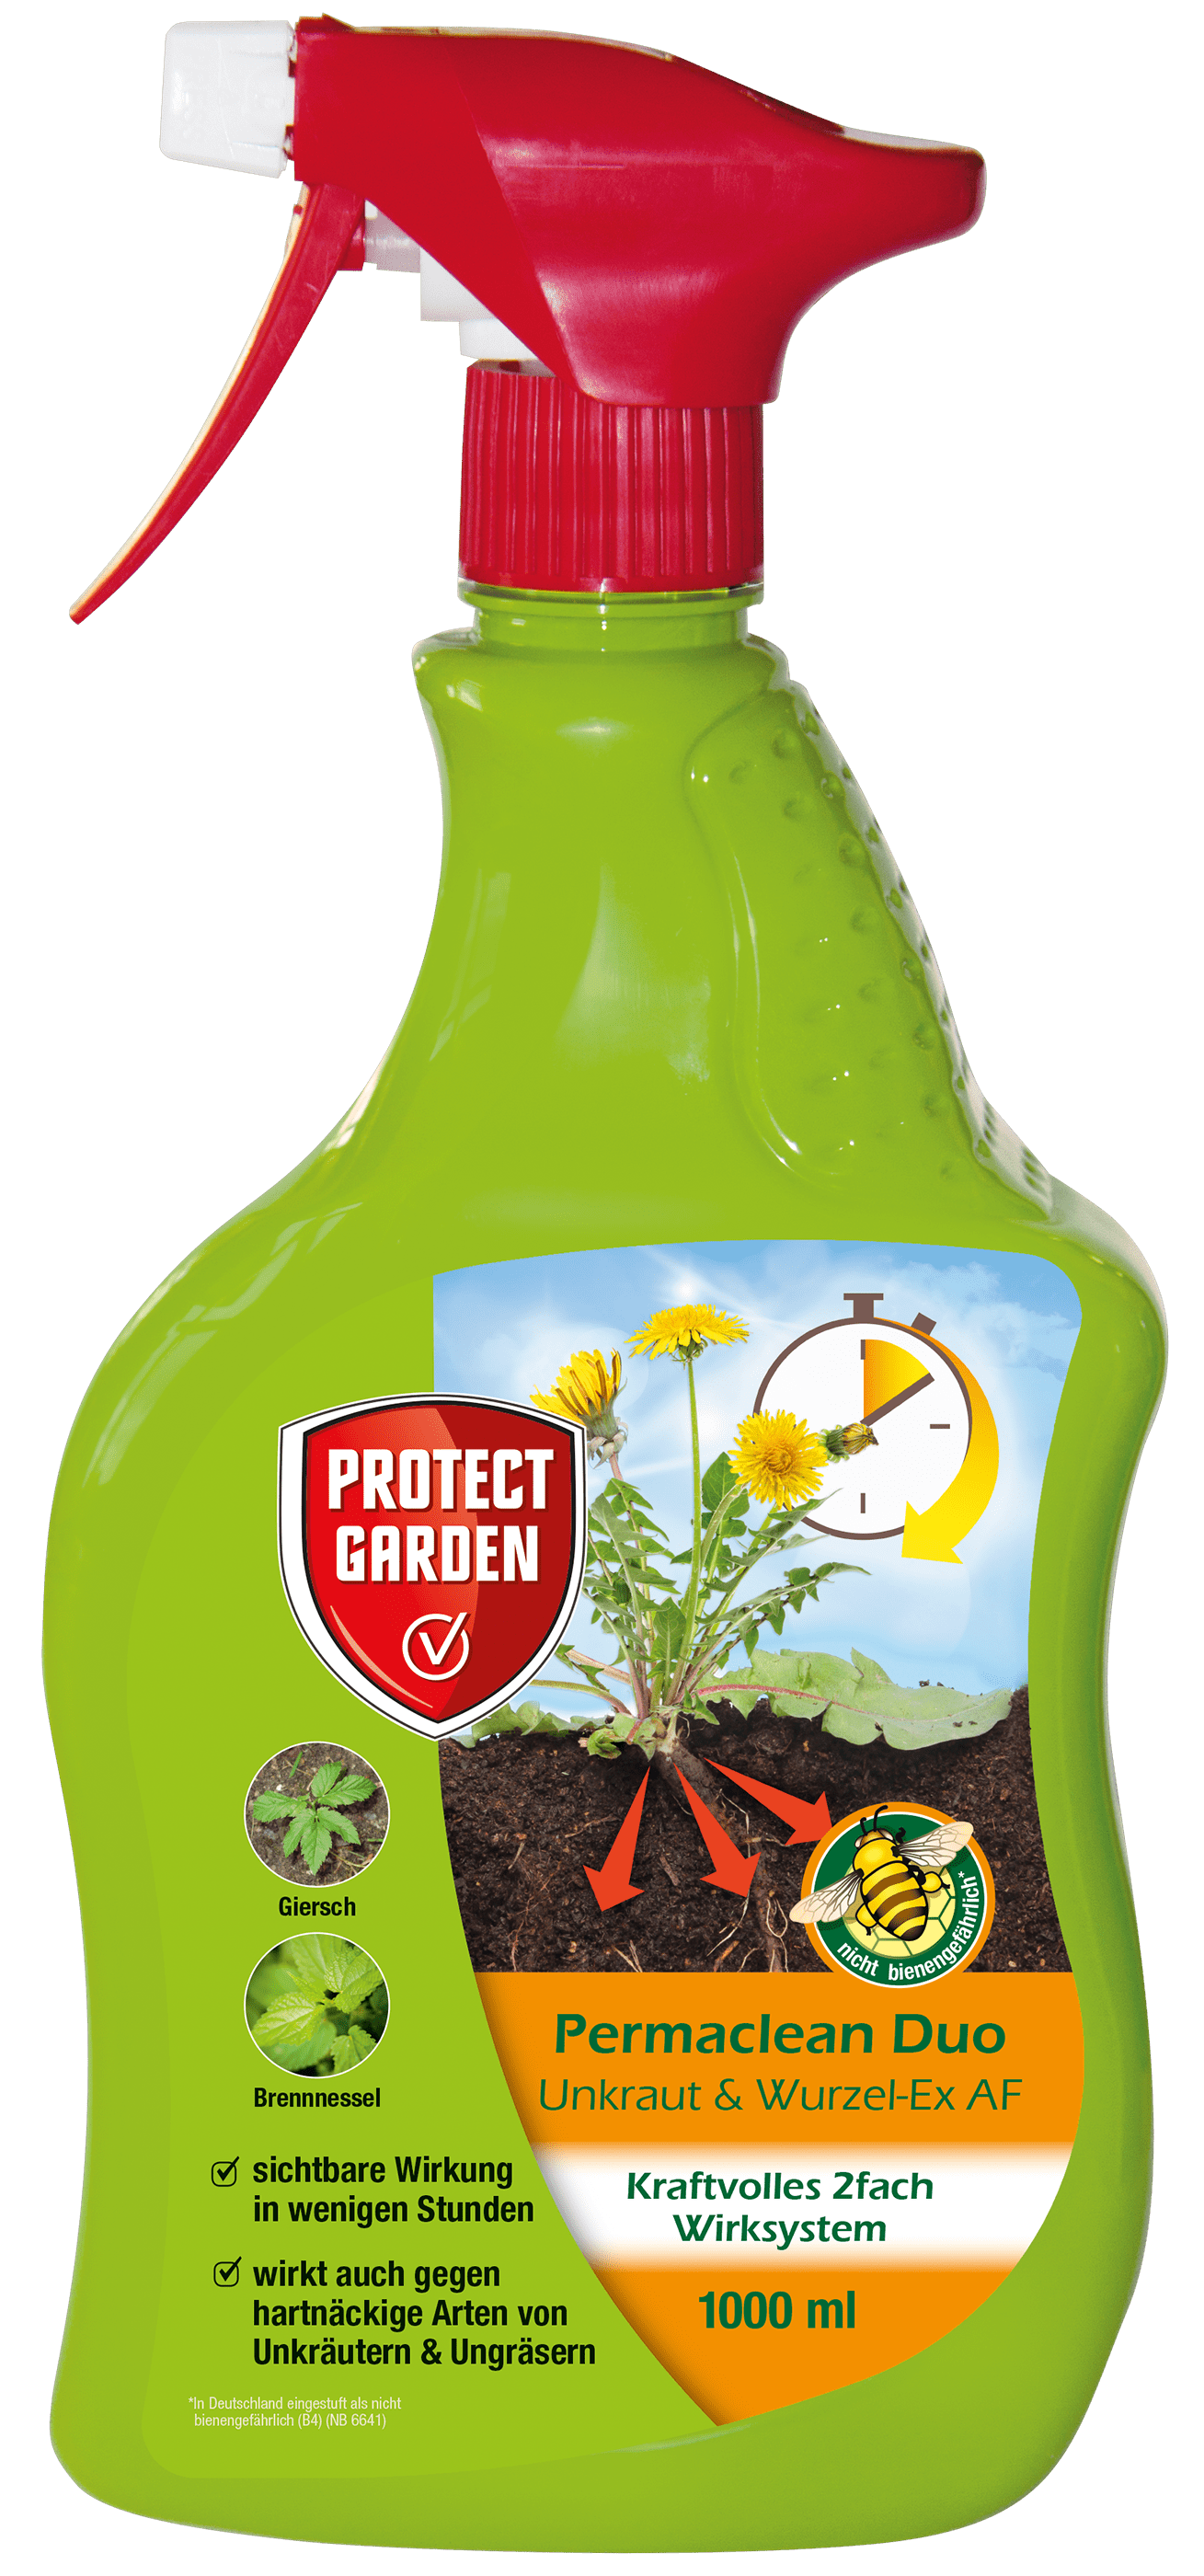 Protect Garden Permaclean Duo Unkraut & Wurzel-Ex AF 1000 ml 